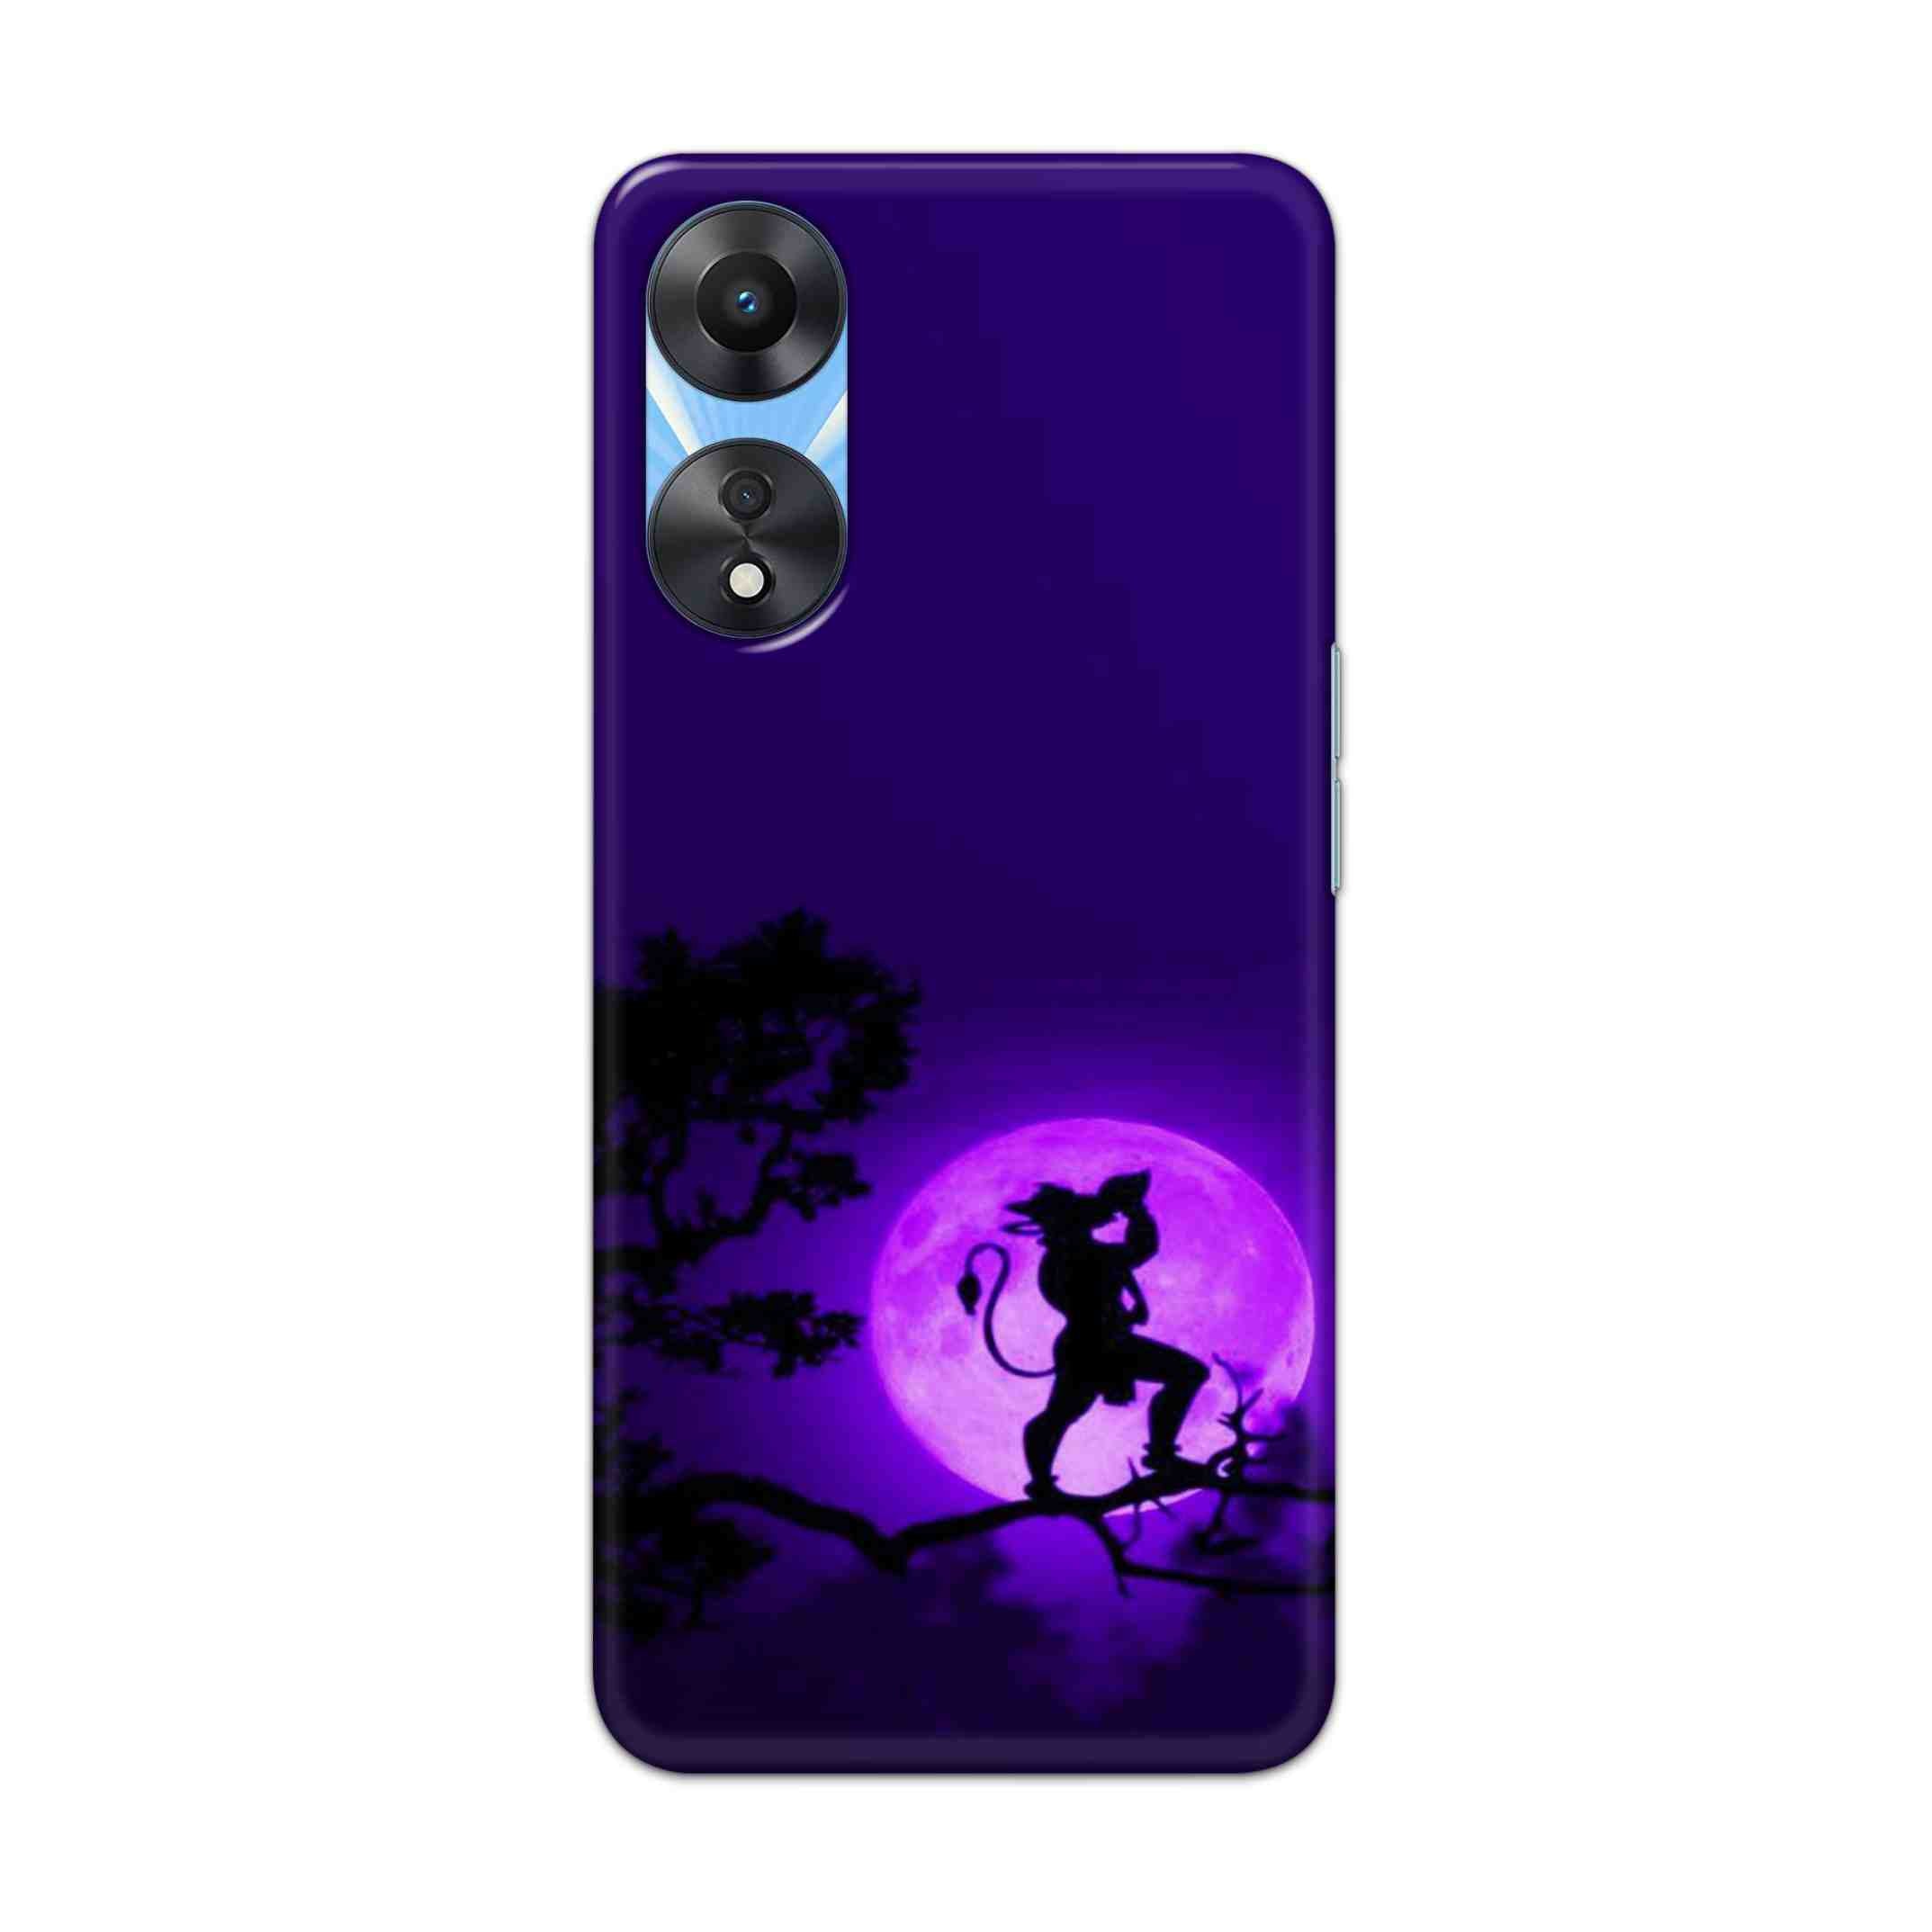 Buy Hanuman Hard Back Mobile Phone Case Cover For OPPO A78 Online